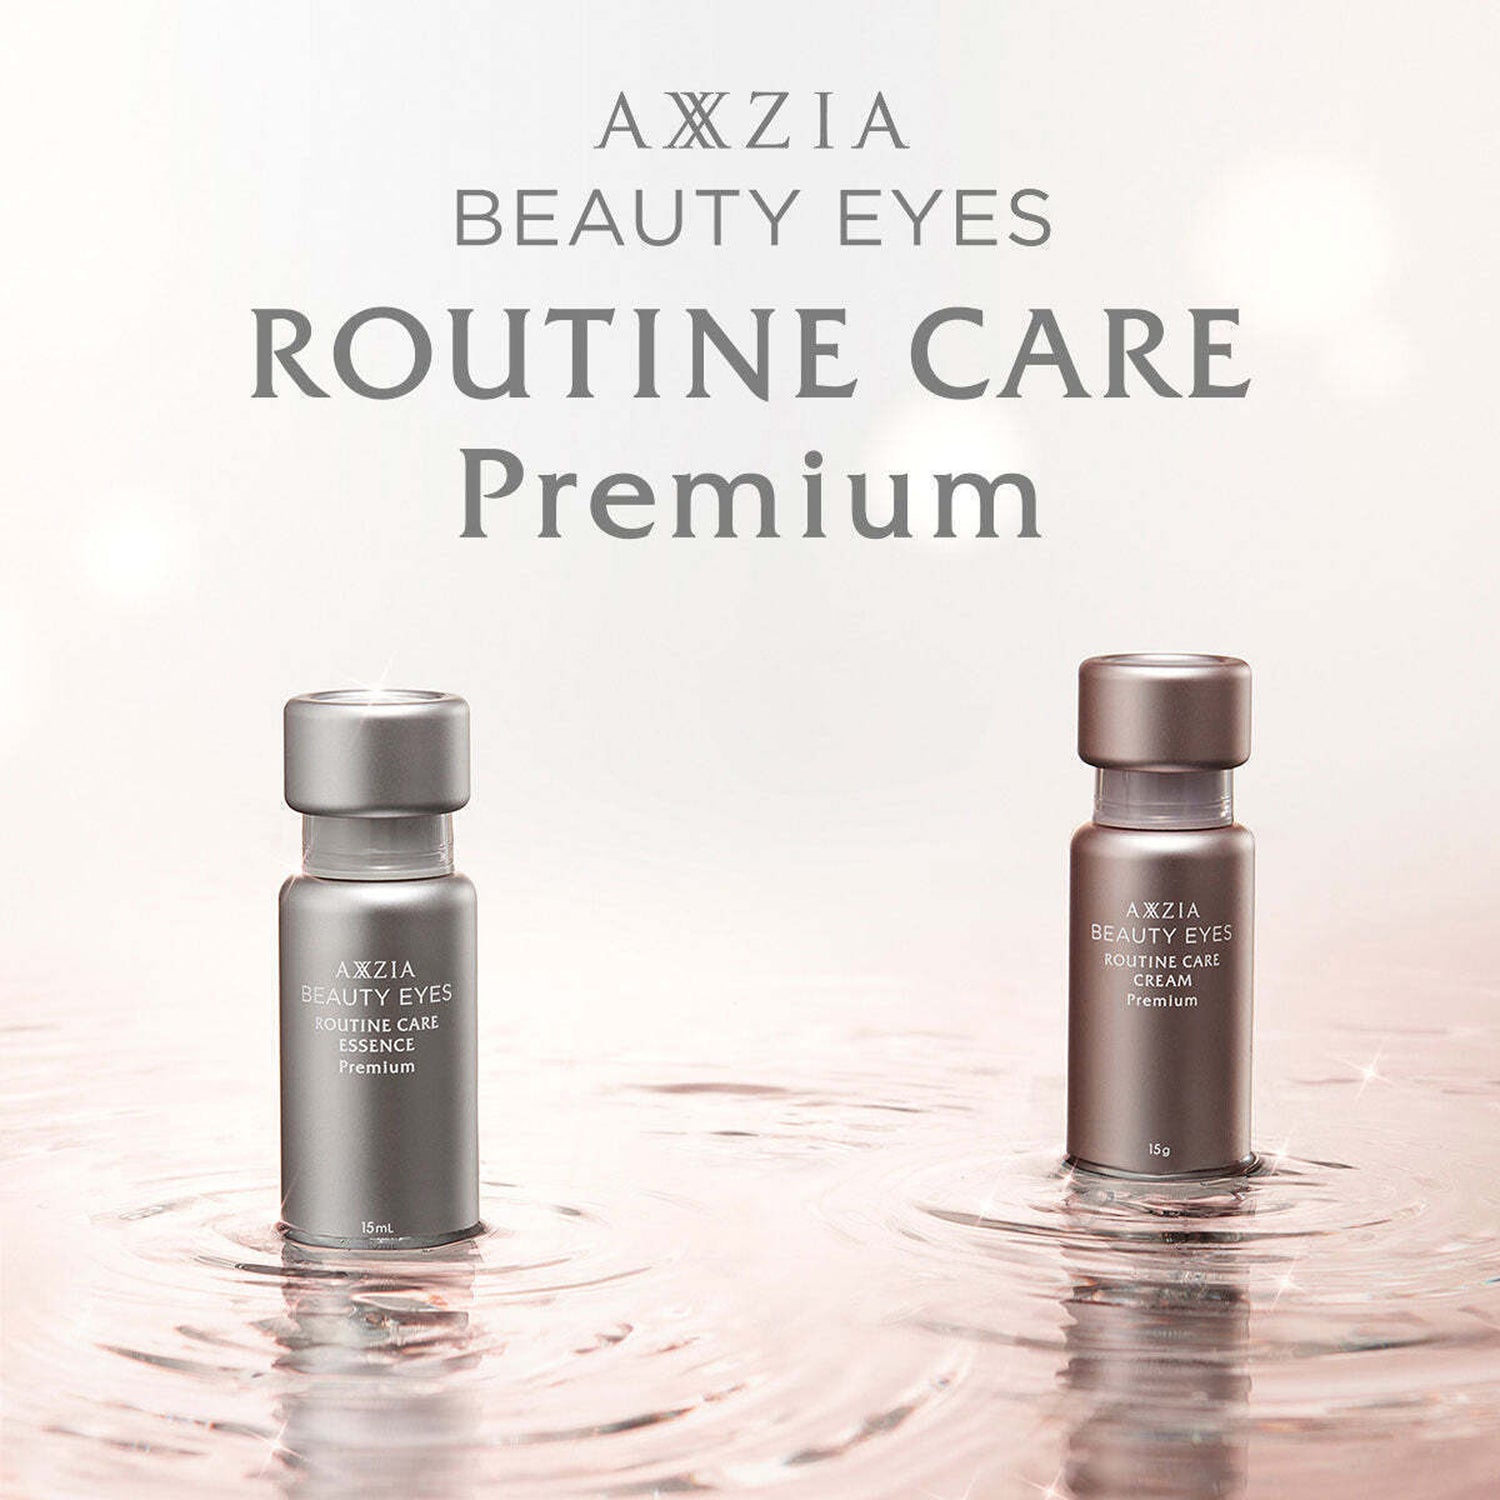 AXXZIA Beauty Eyes Routine Care Premium 15g